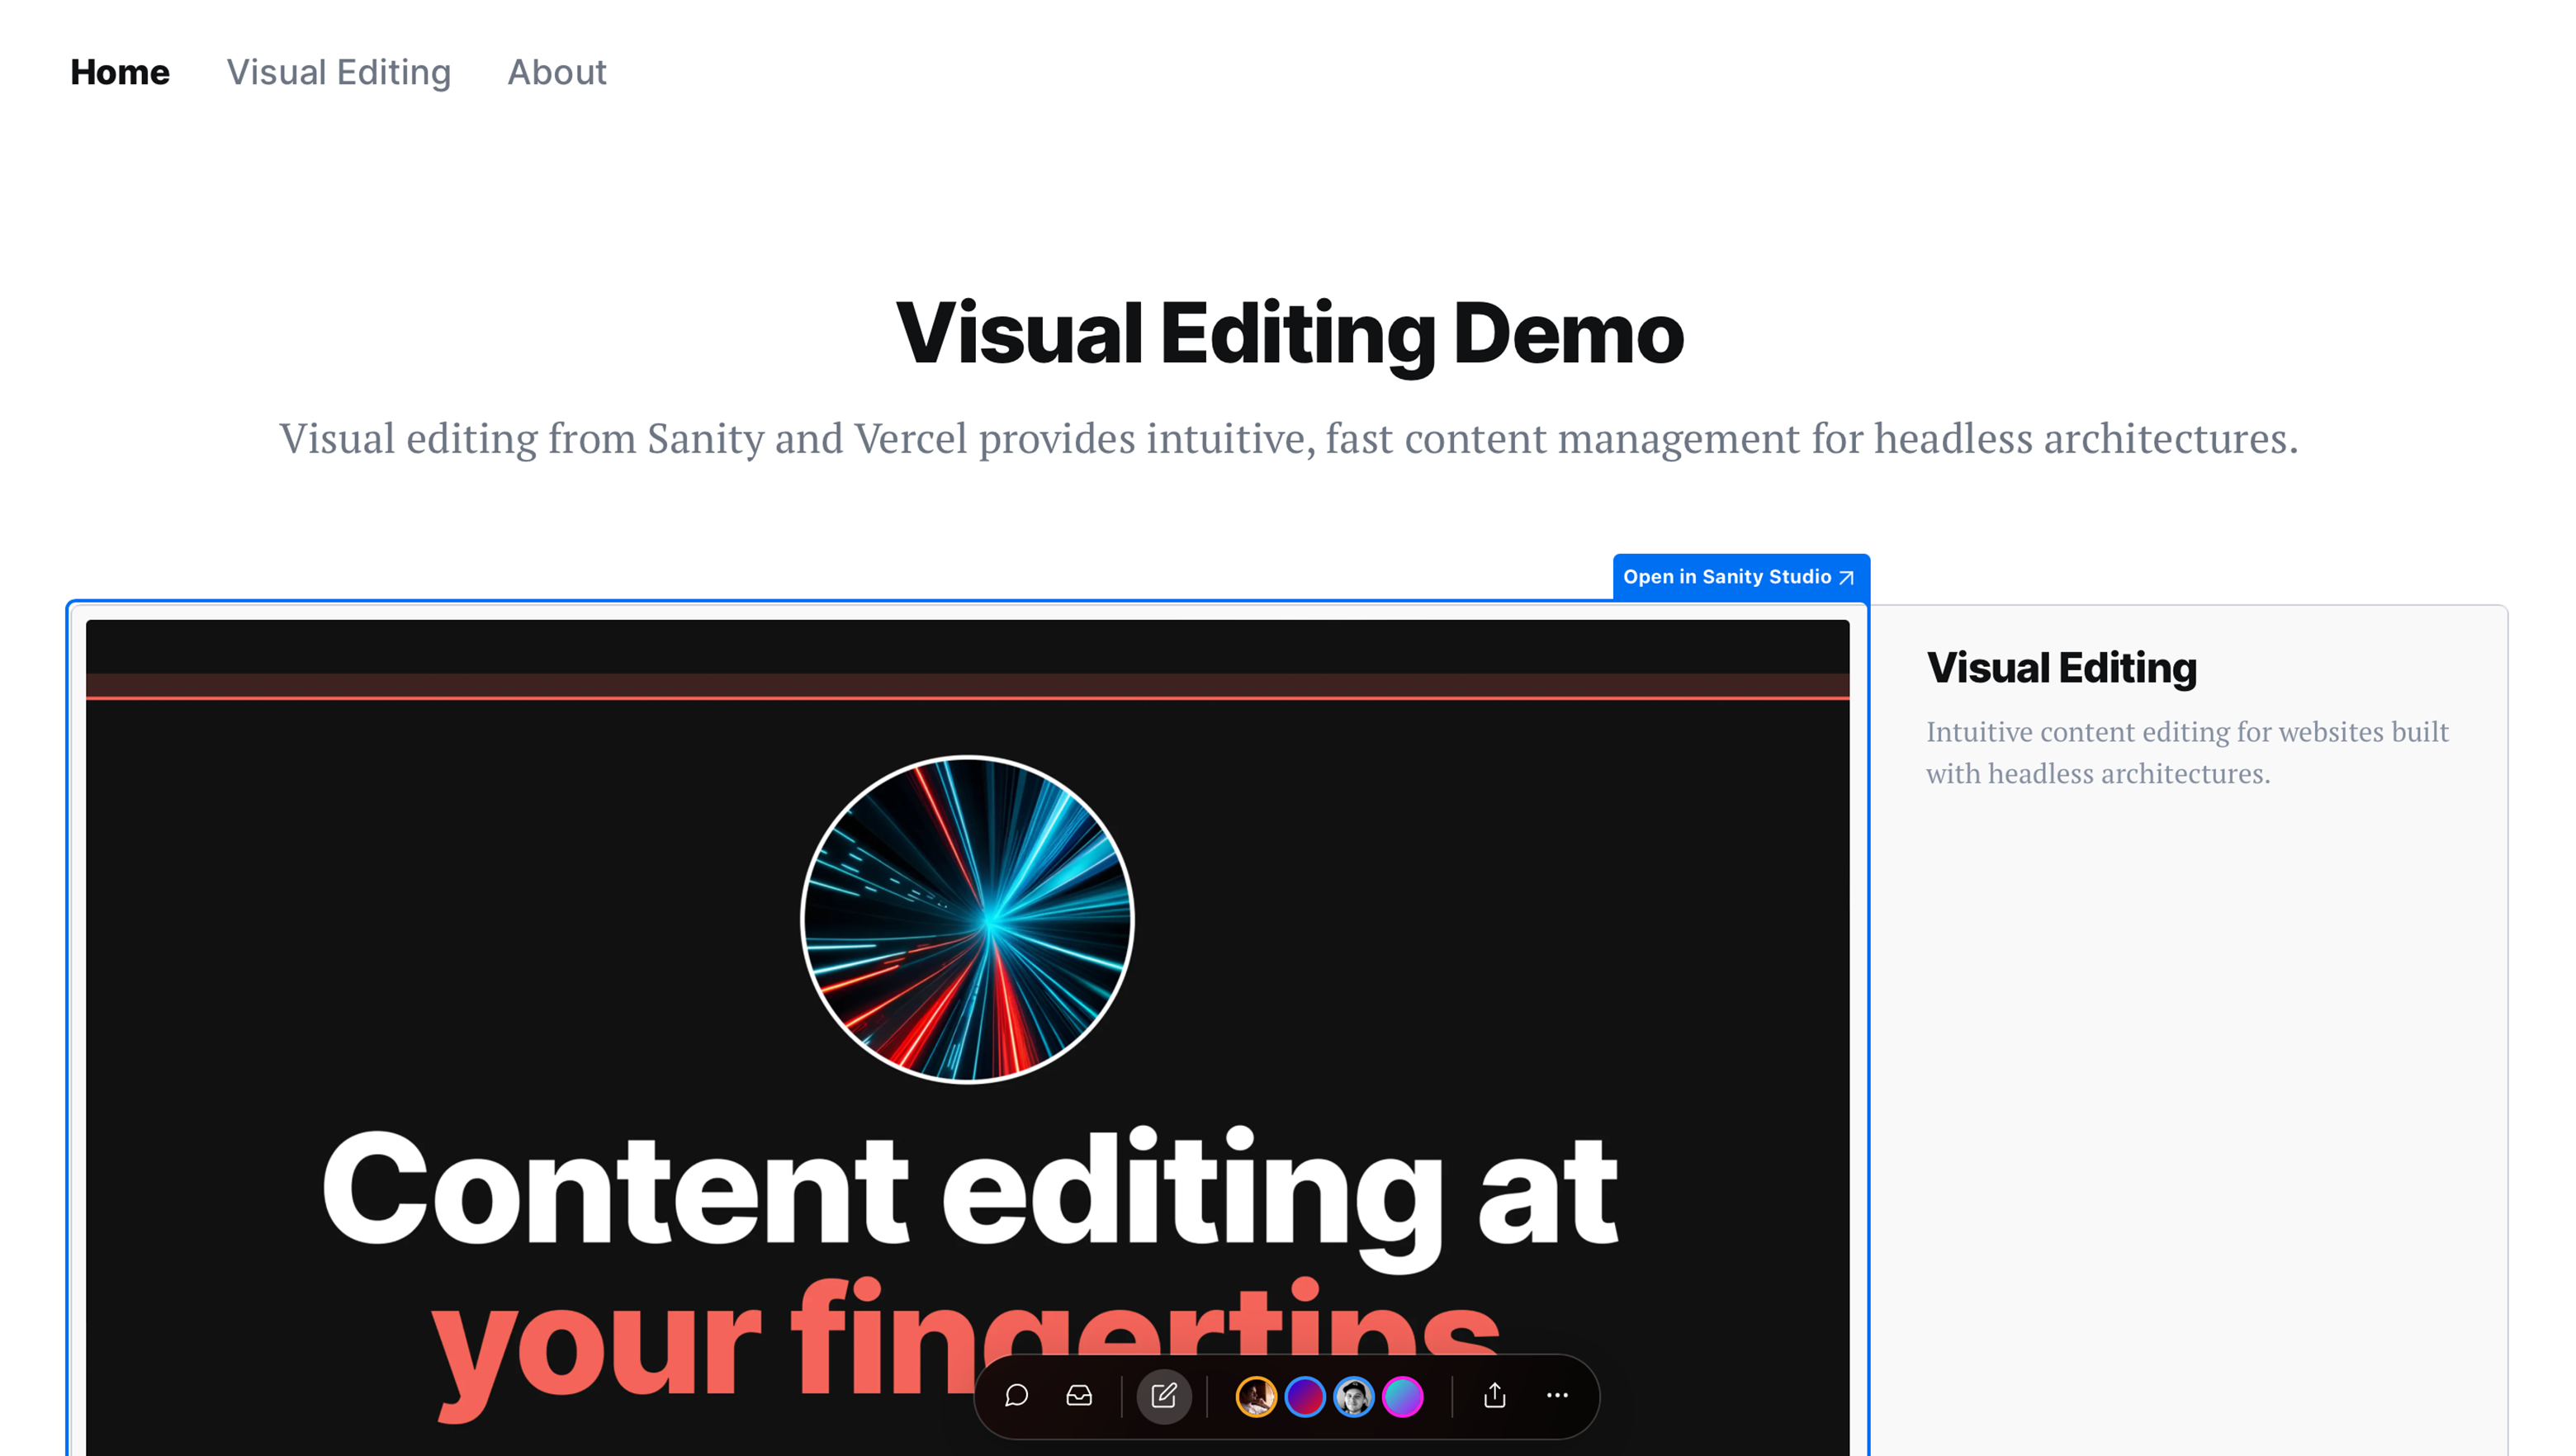 Sanity Visual Editing Demo